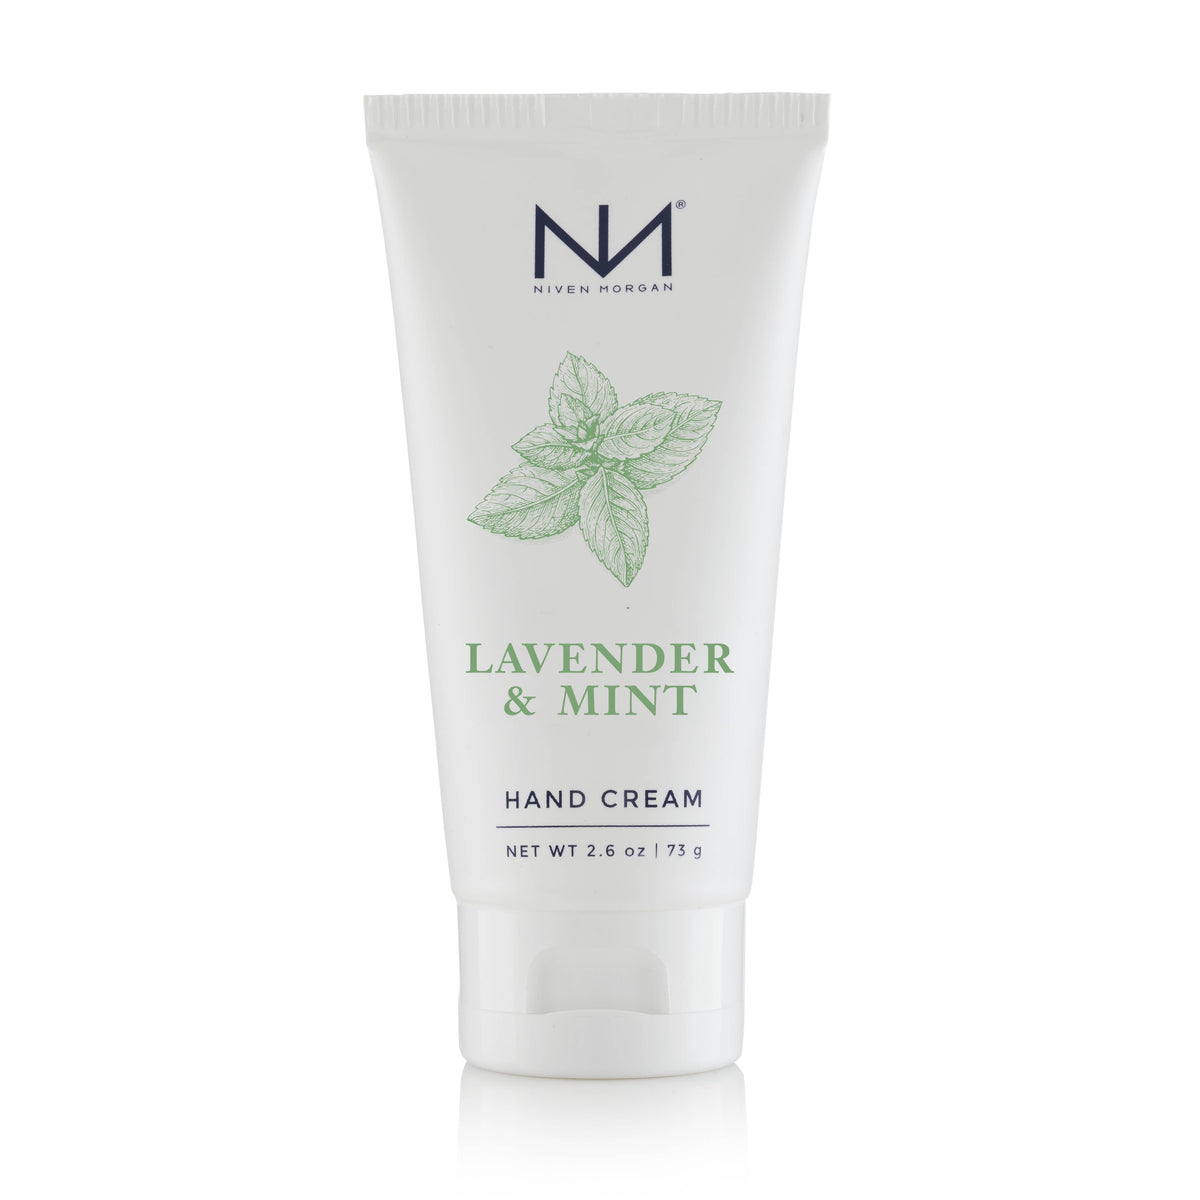 Niven Morgan Lavender & Mint Travel Hand Cream - 2.6oz